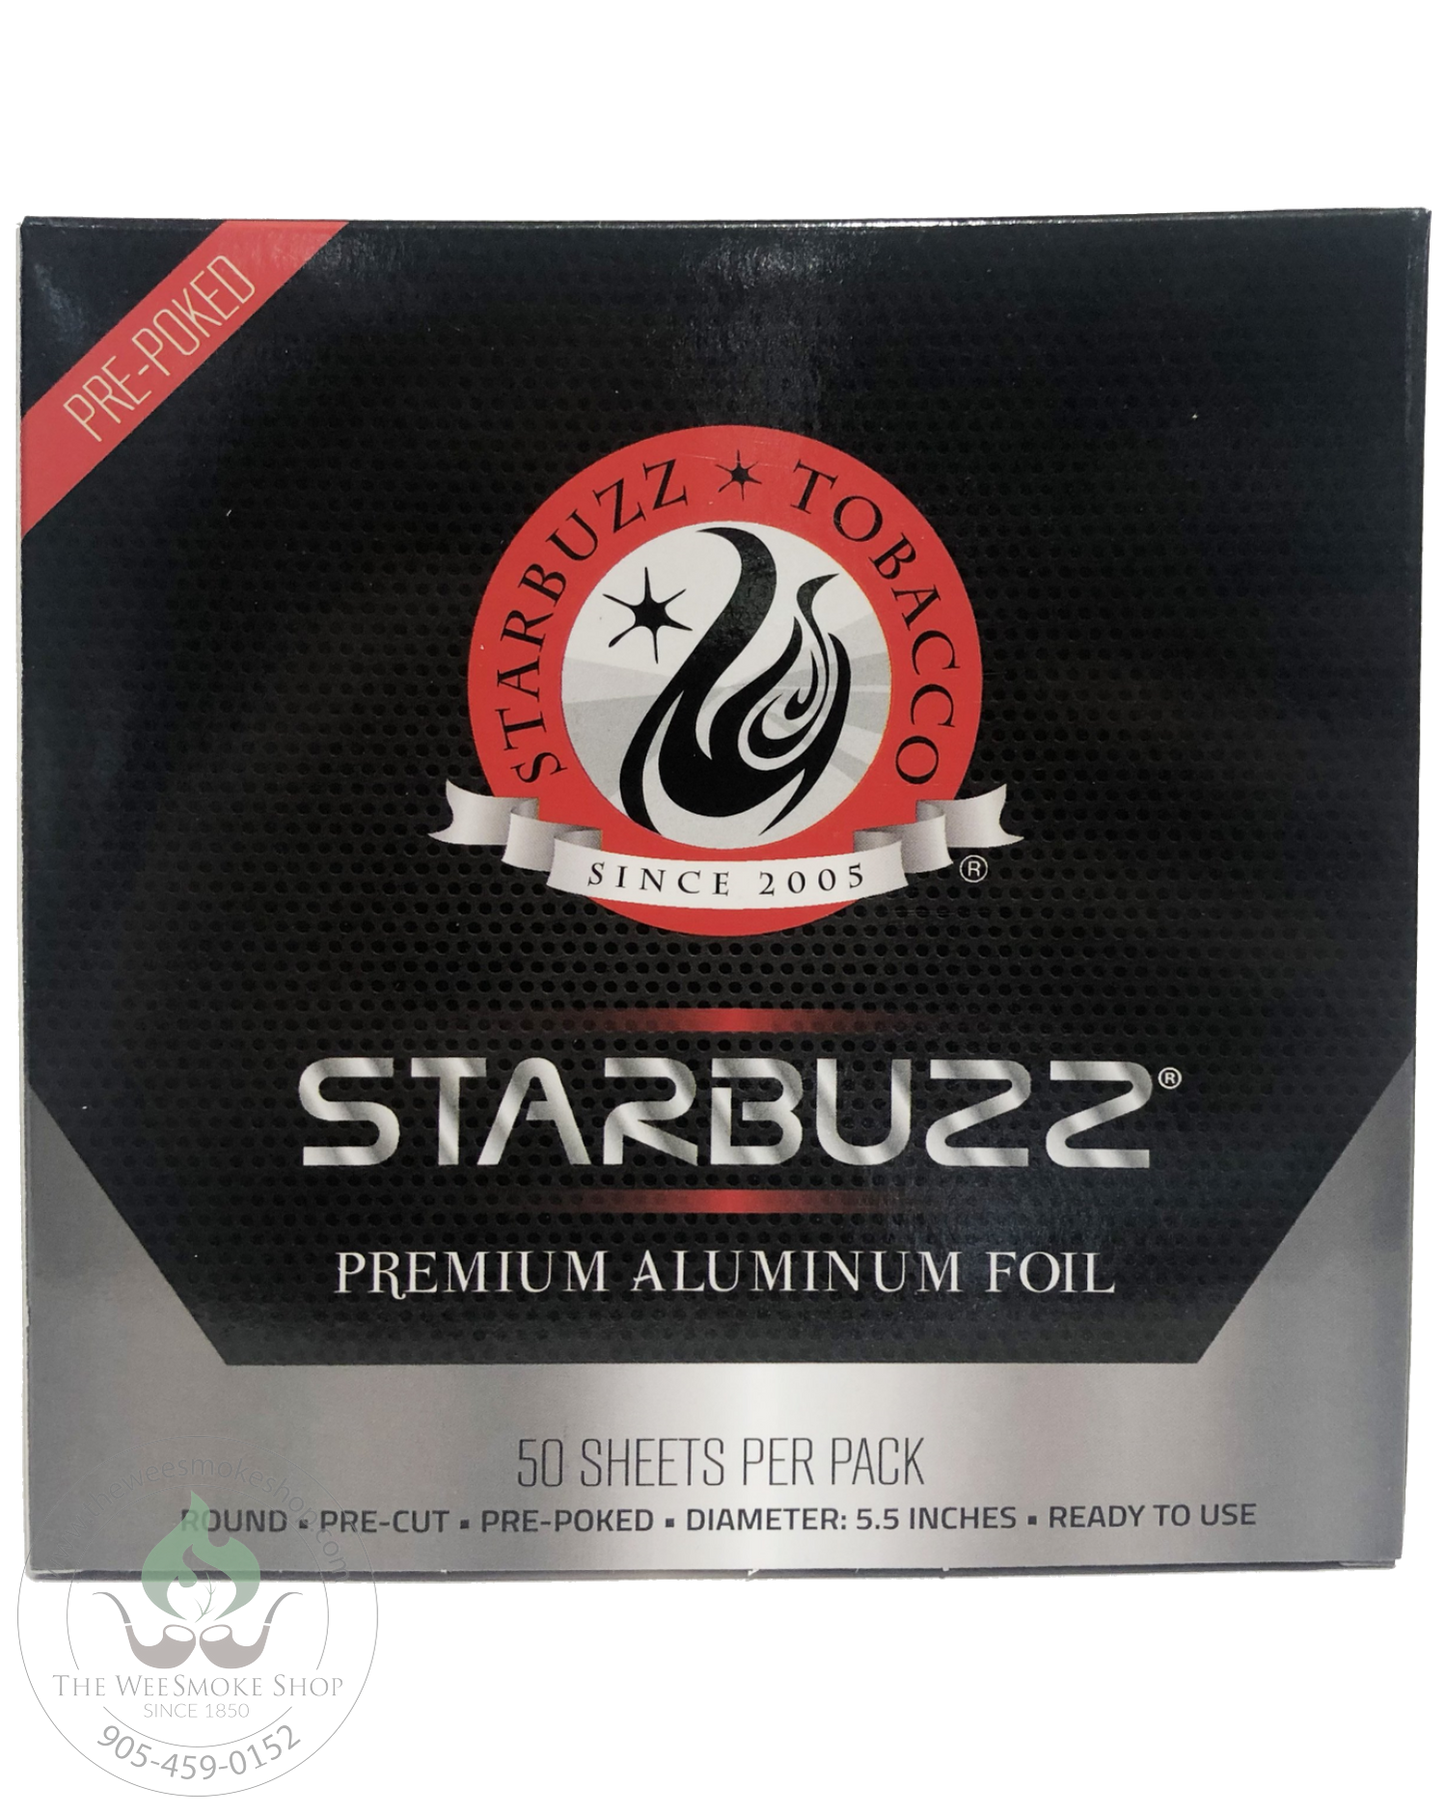 Starbuzz Premium Aluminum Foil Box- The Wee Smoke Shop 